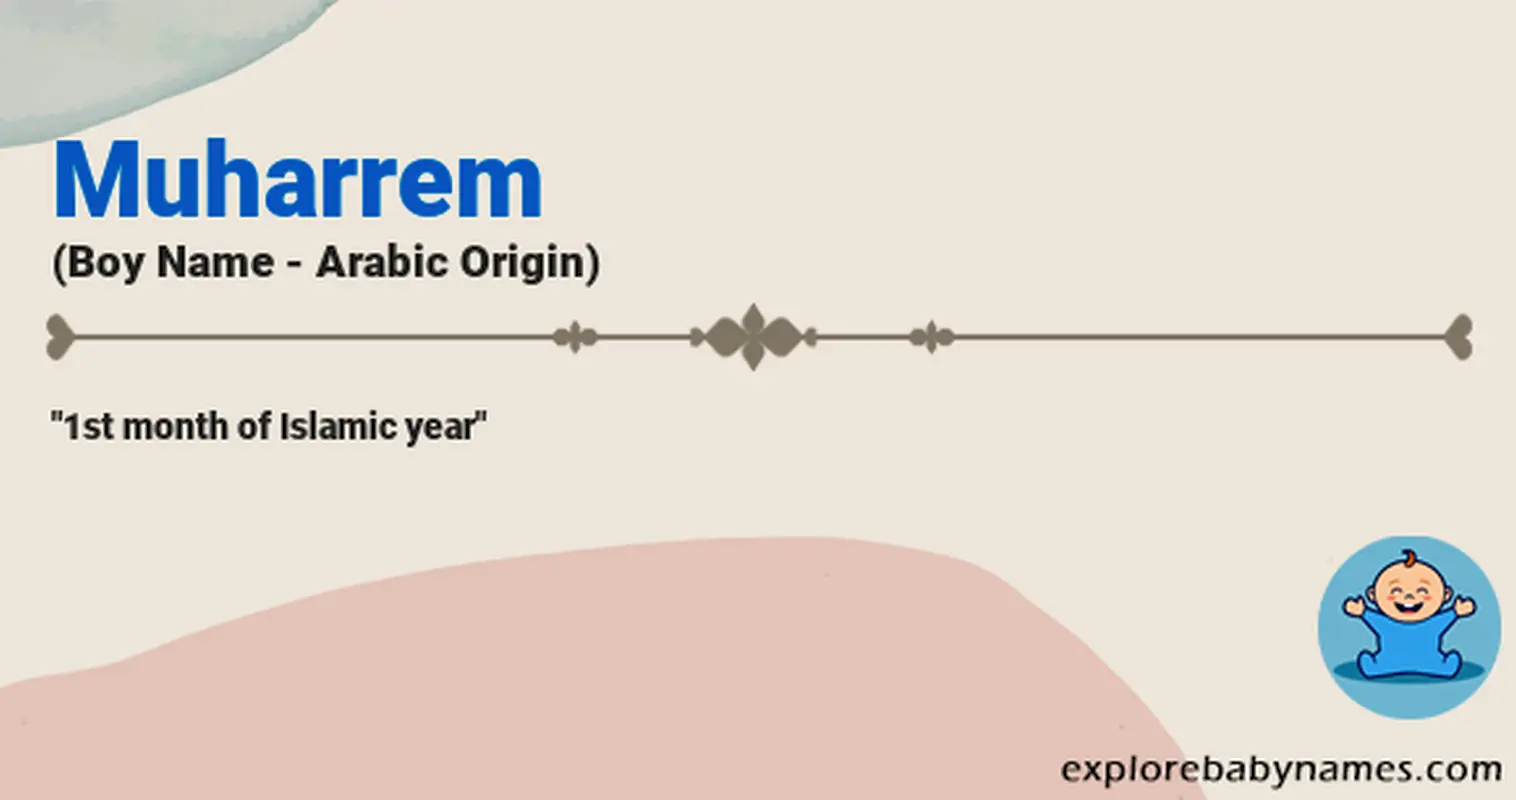 Meaning of Muharrem